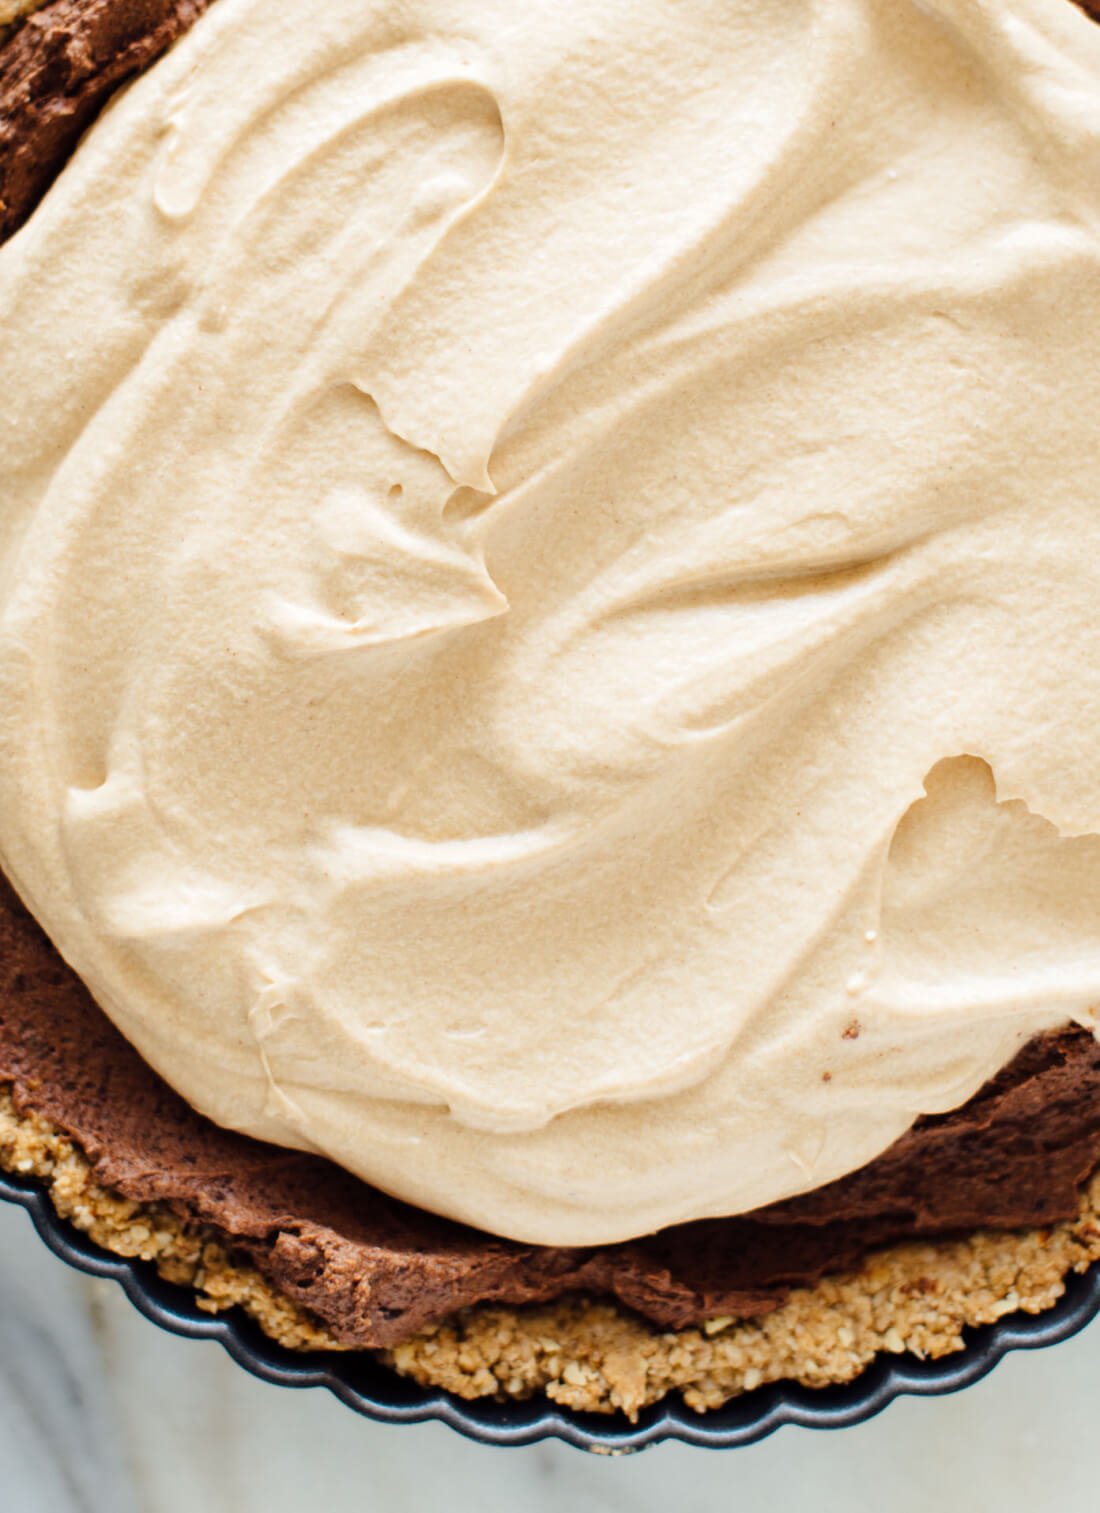 Vegan chocolate peanut butter layers - so good!